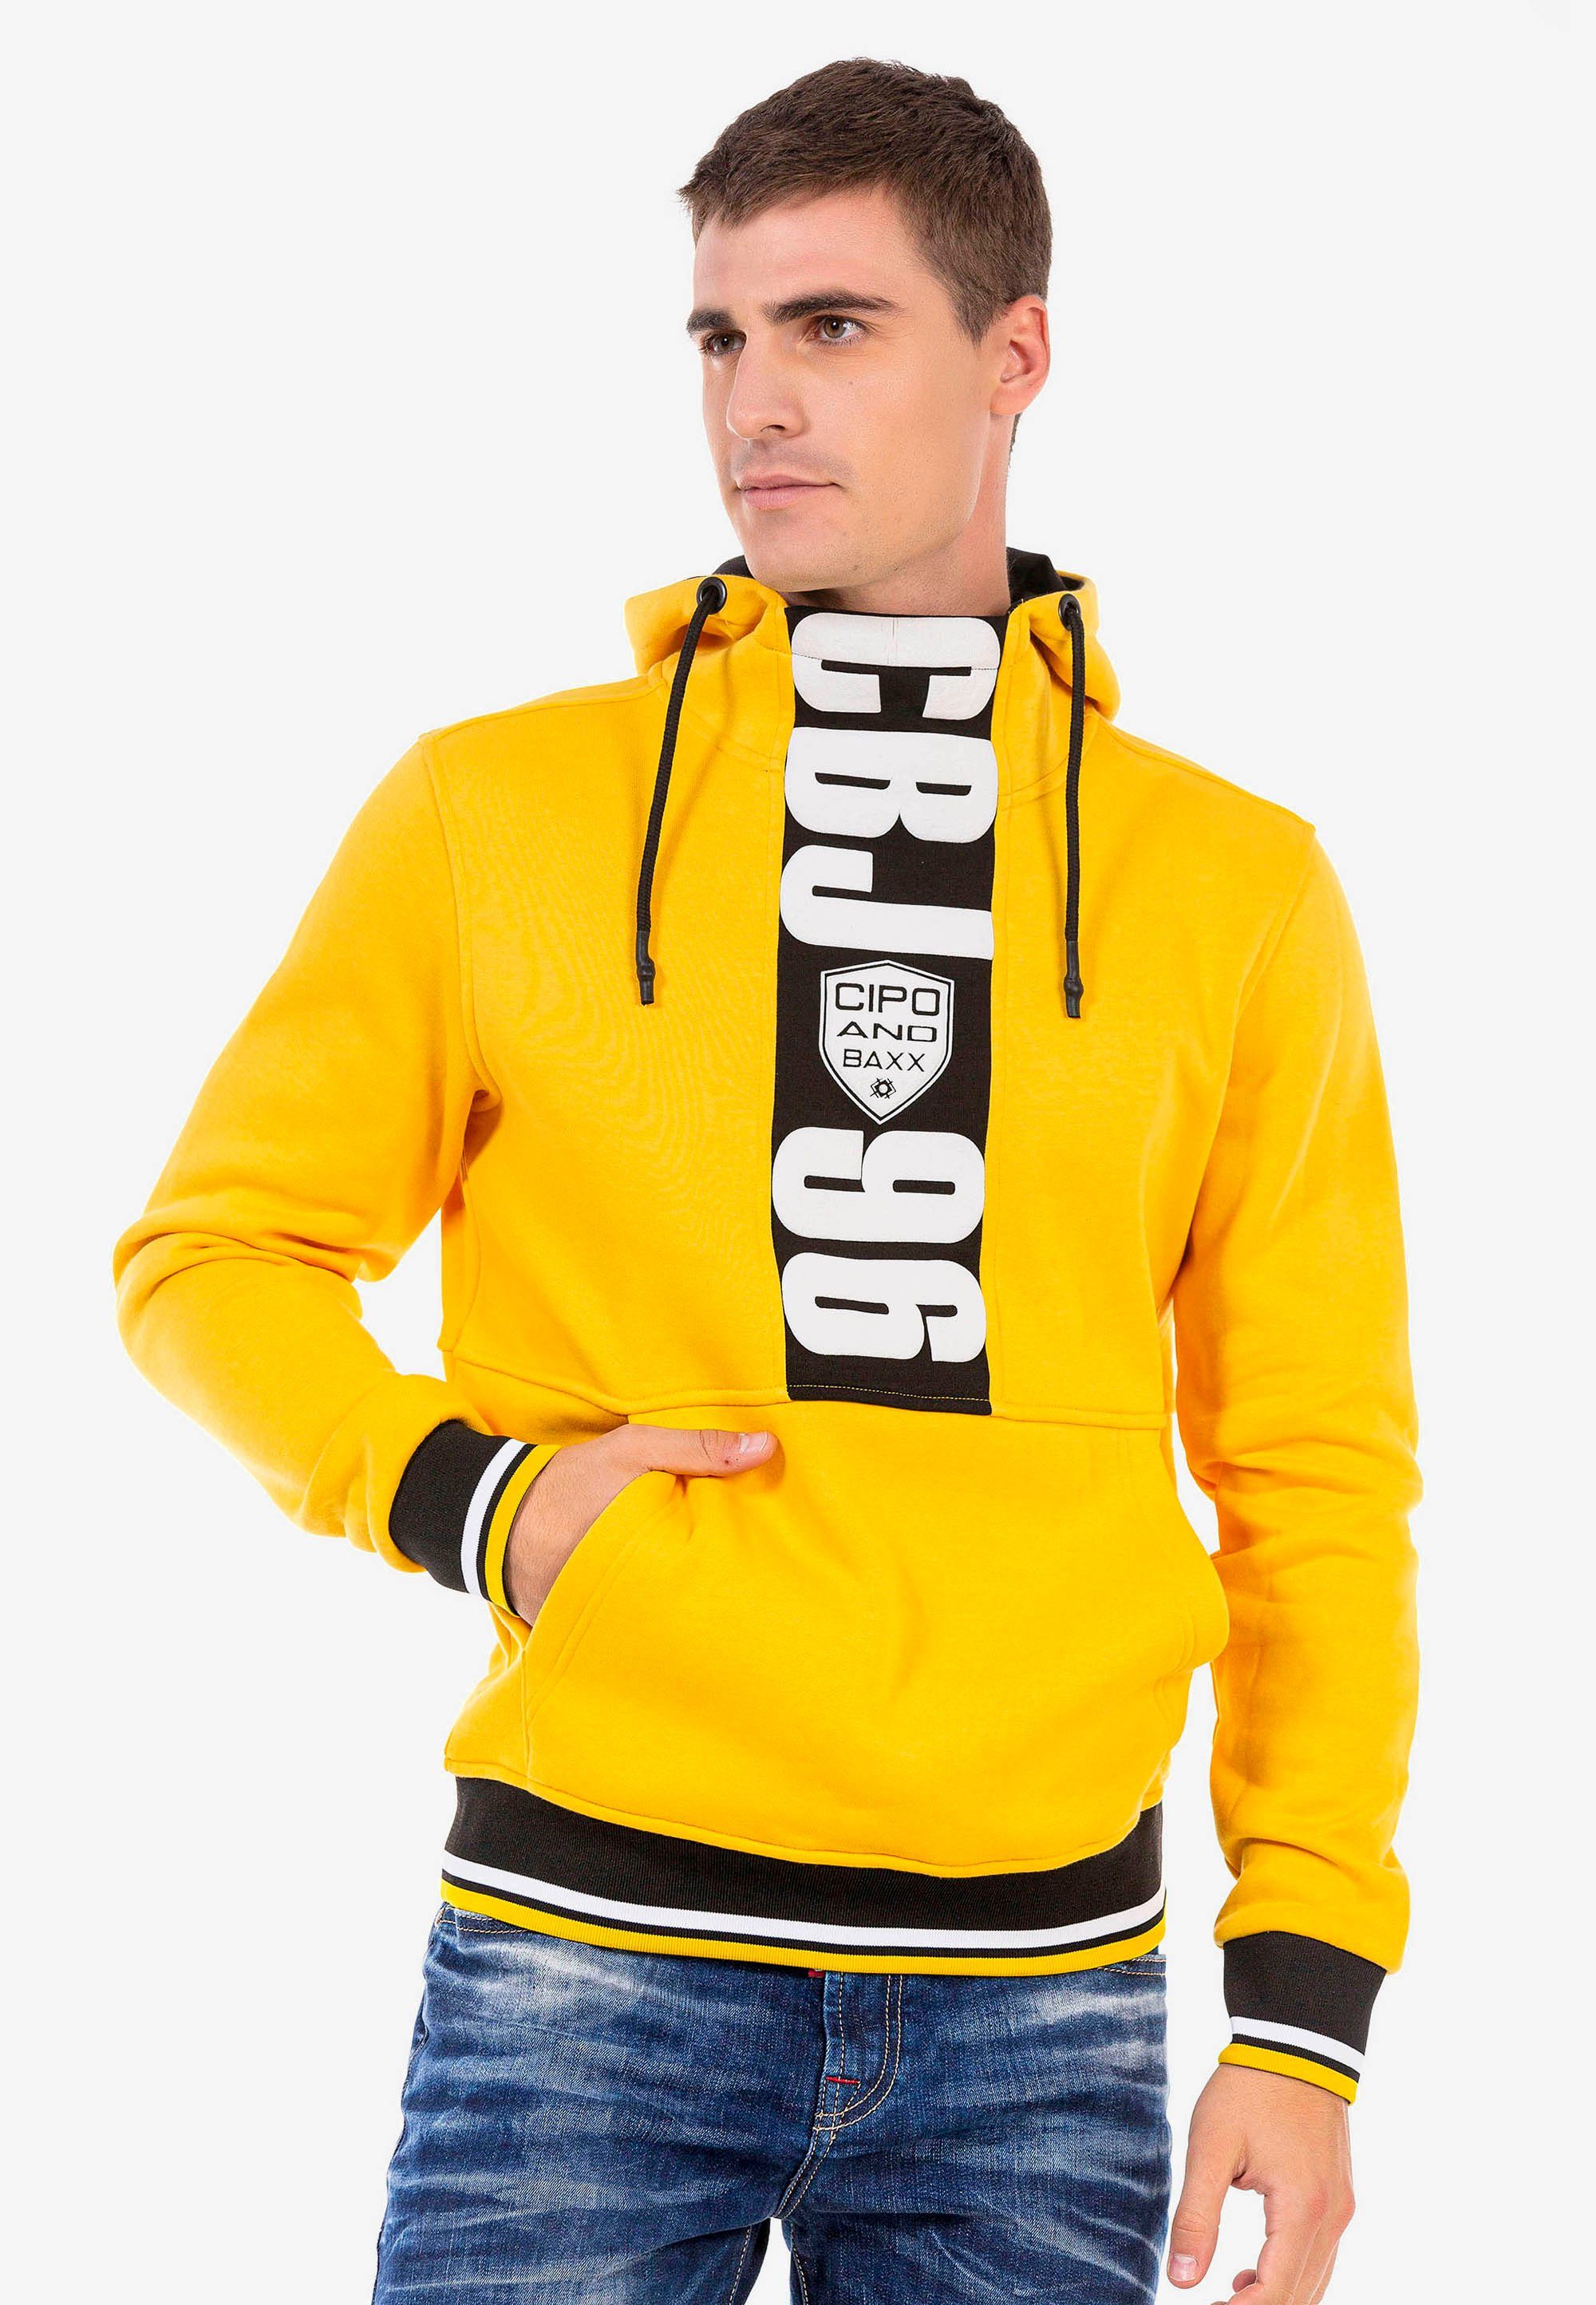 Kapuzensweatshirt Baxx mit tollen gelb Markenprints & Cipo